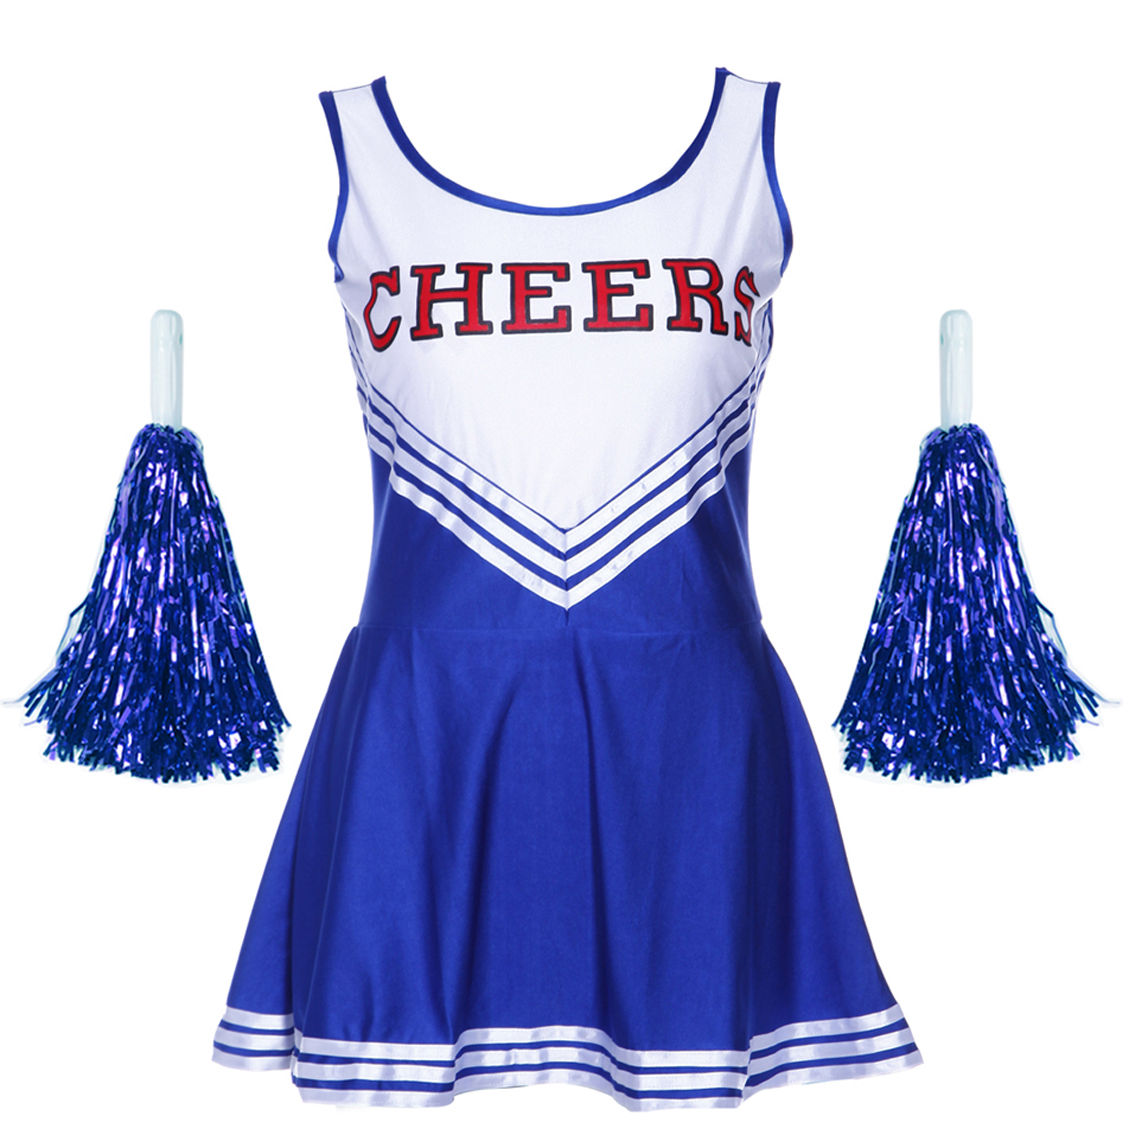 Hot Design Your Own Cheerleader Uniforms Adult Cheerleading Uniforms Sublimated Cheerleading